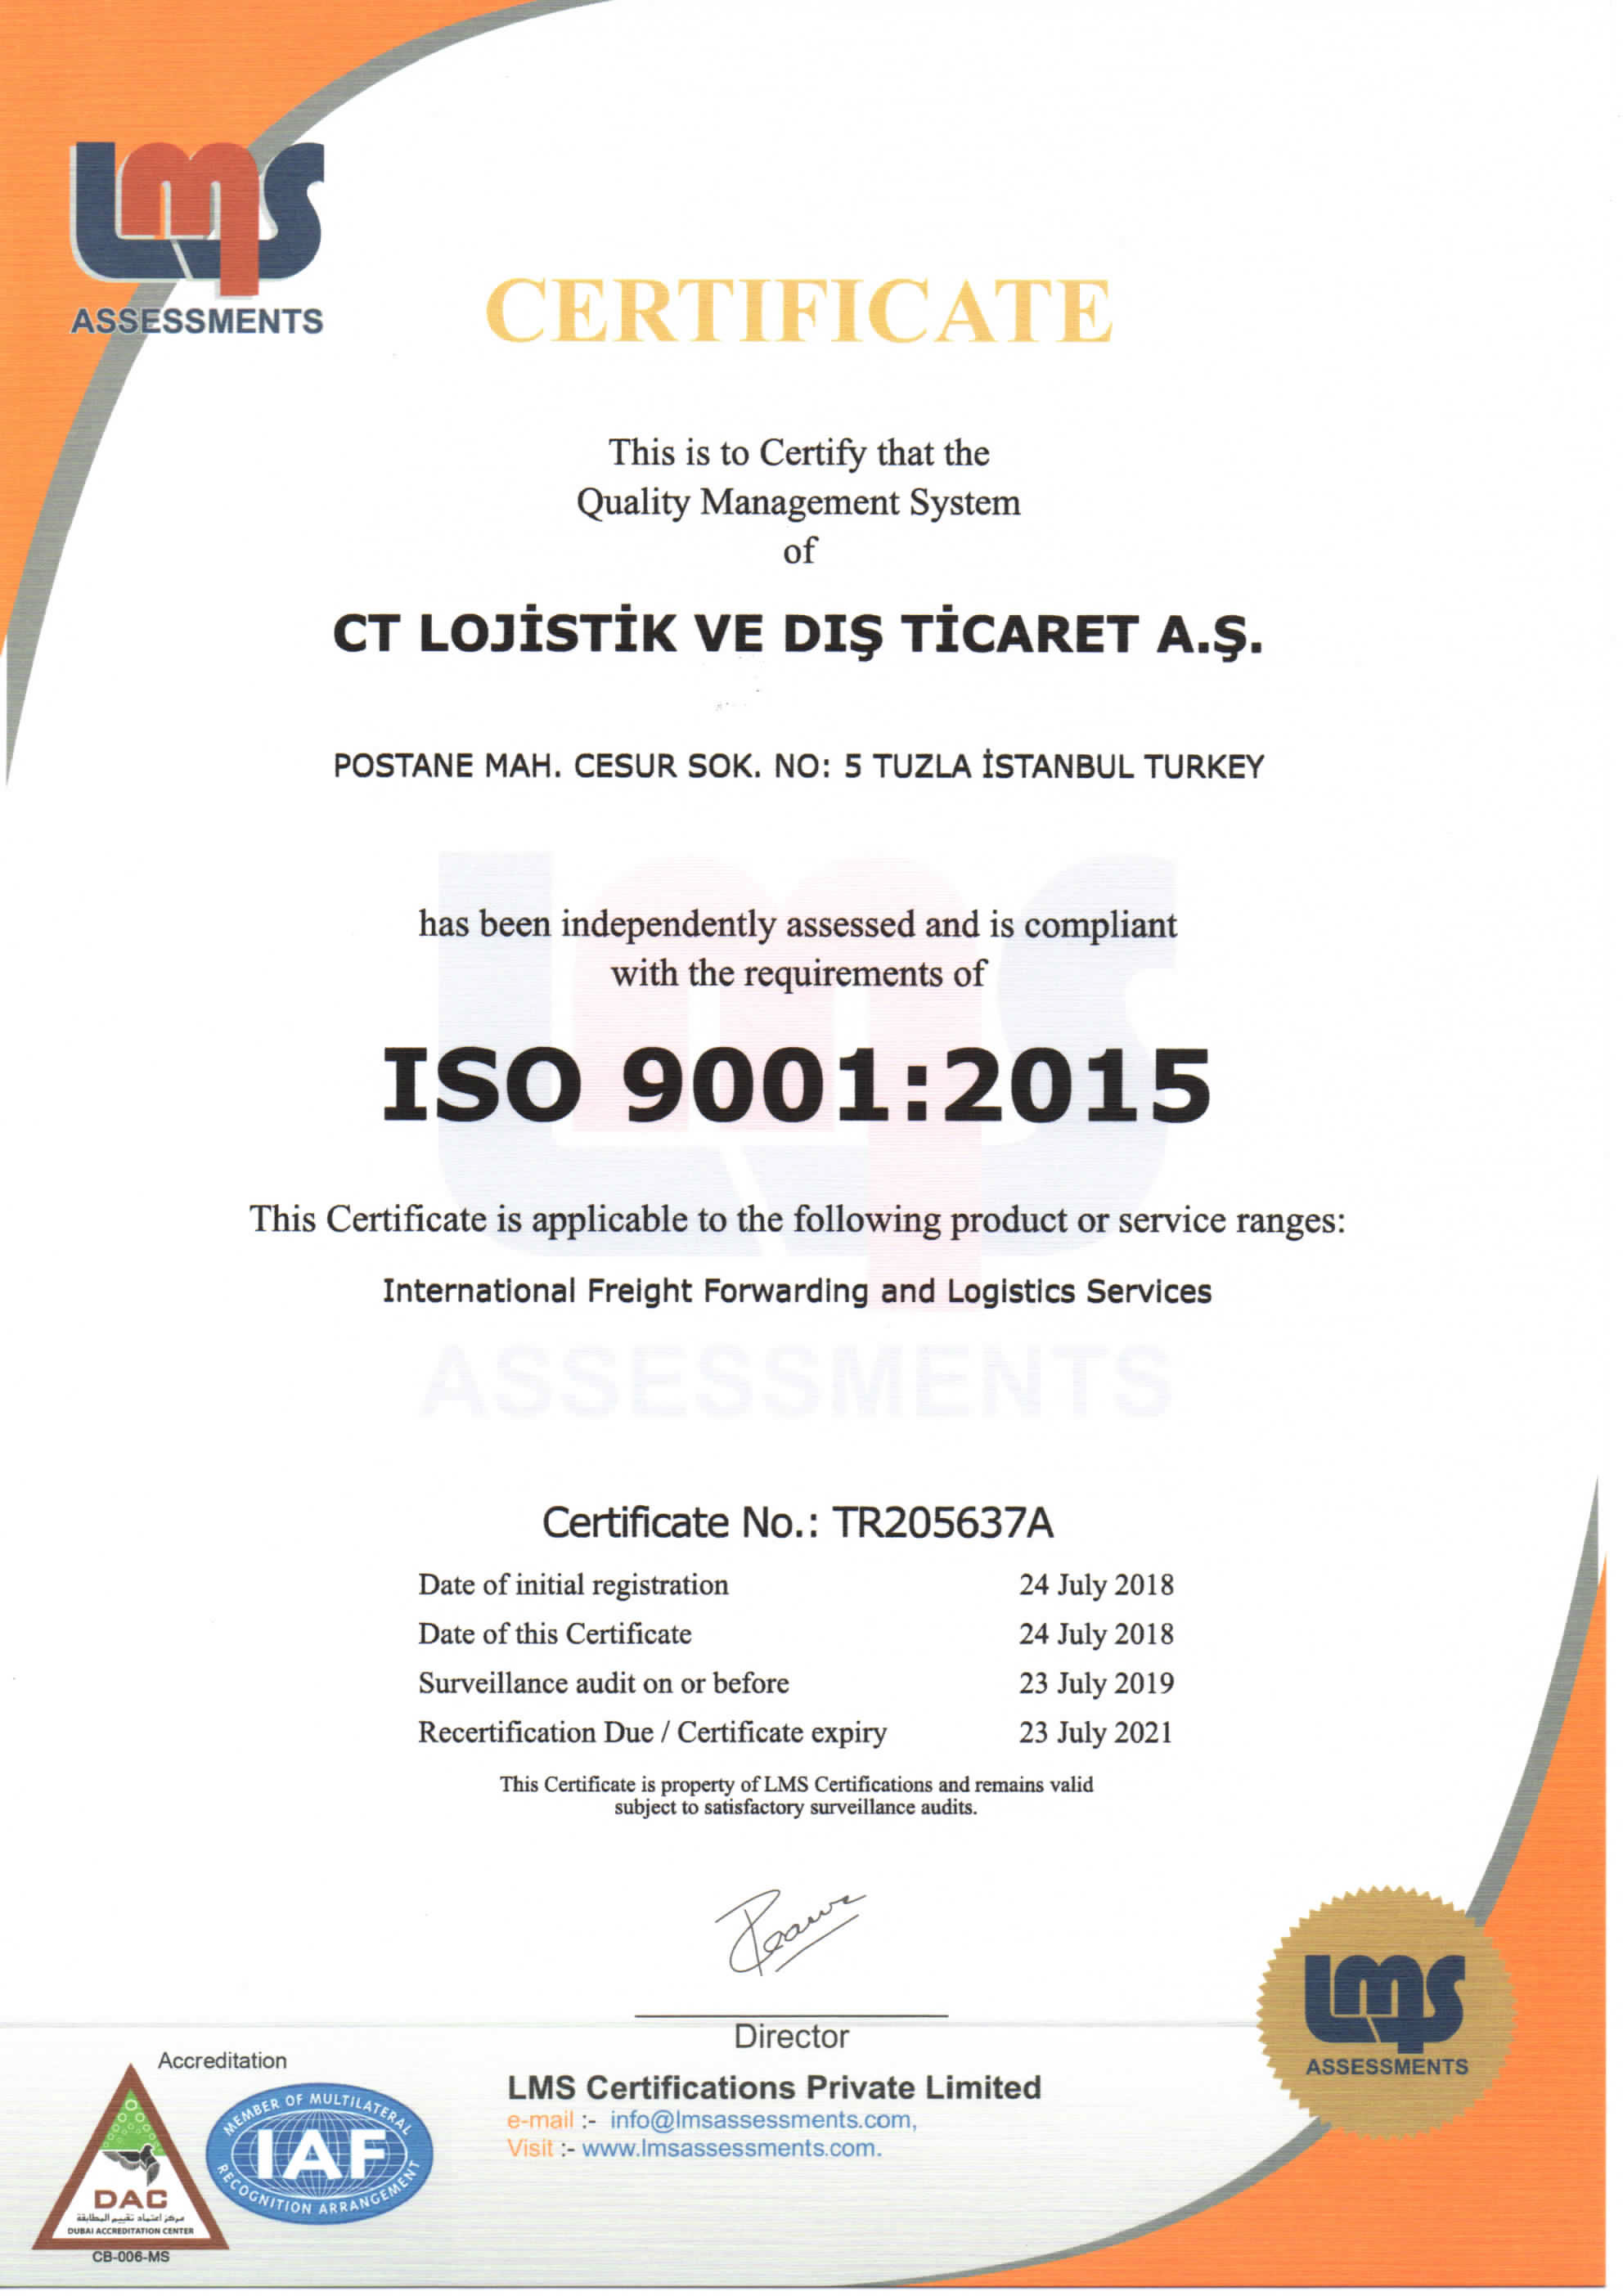 CT Lojistik ve Dış Ticaret A.Ş ISO 9001